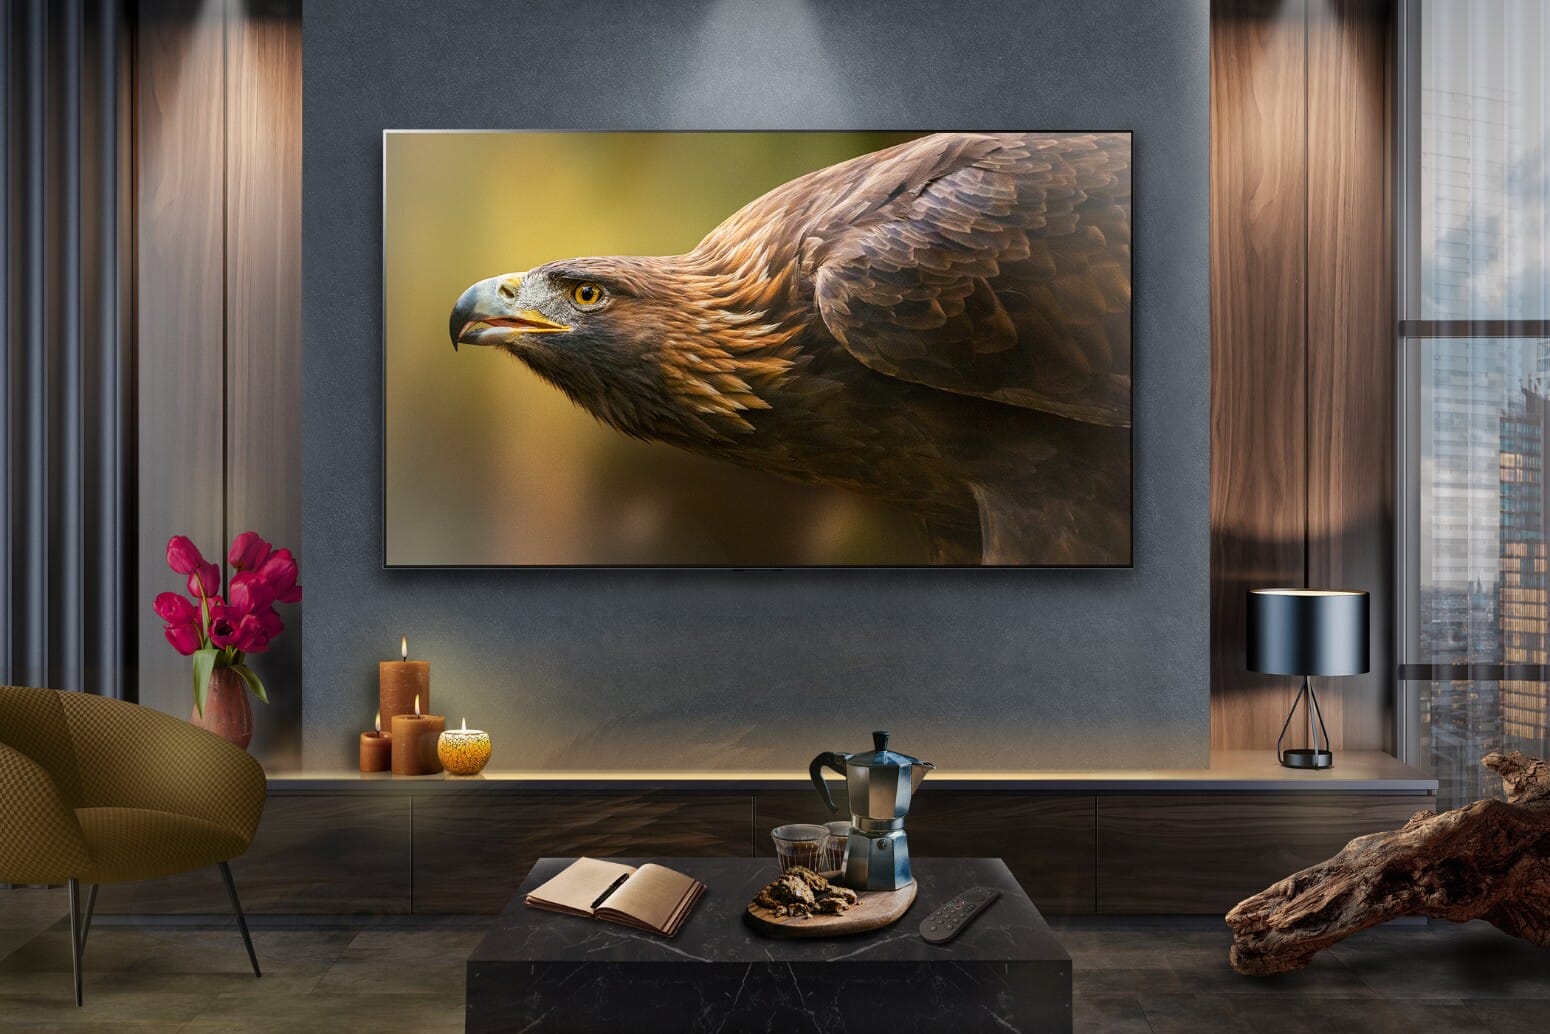 LG G4 OLED evo 4K Smart TV (Wall Mount)